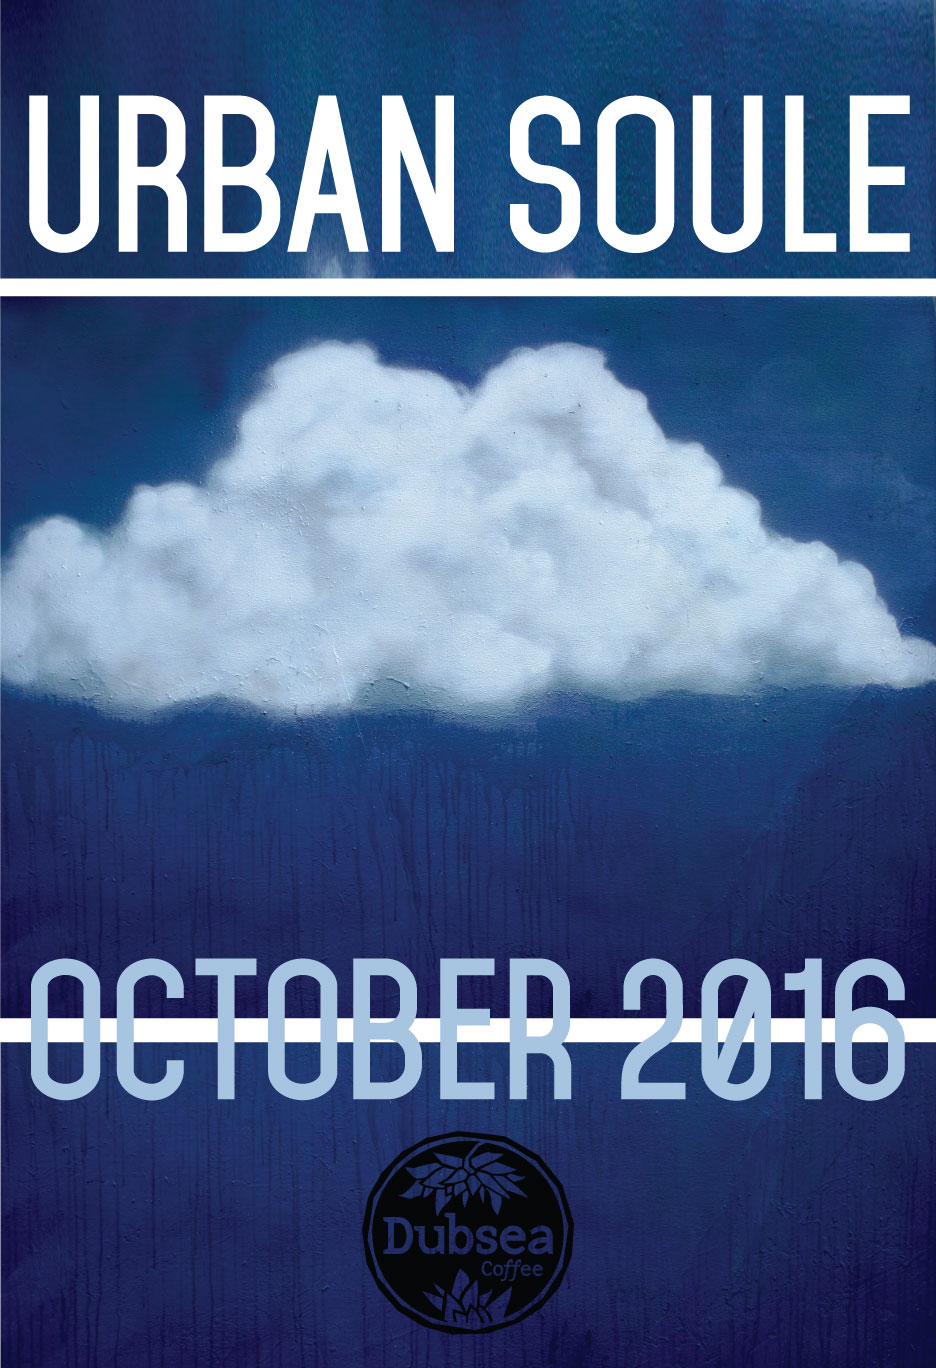 Urban-Soule-Poster.jpg